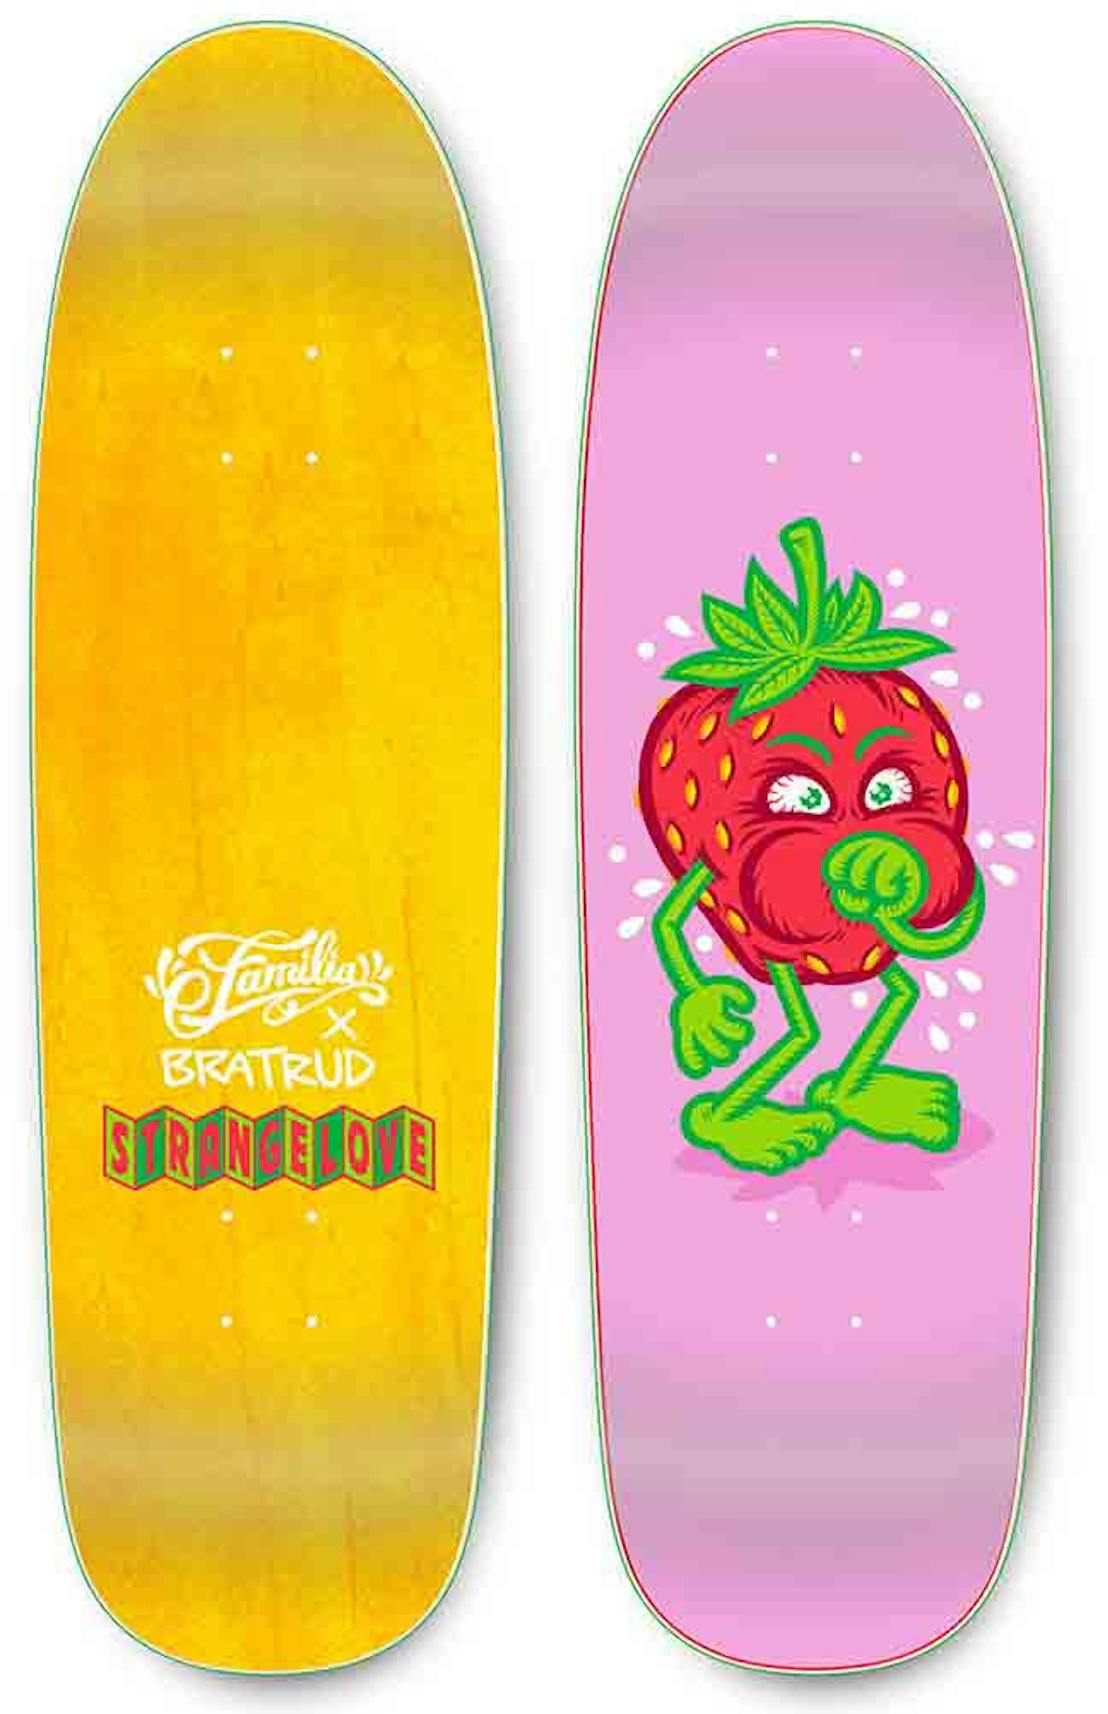 StrangeLove x Familia x Todd Braturd Strawberry Cough 9.125 Skateboard Deck  - SS22 - US